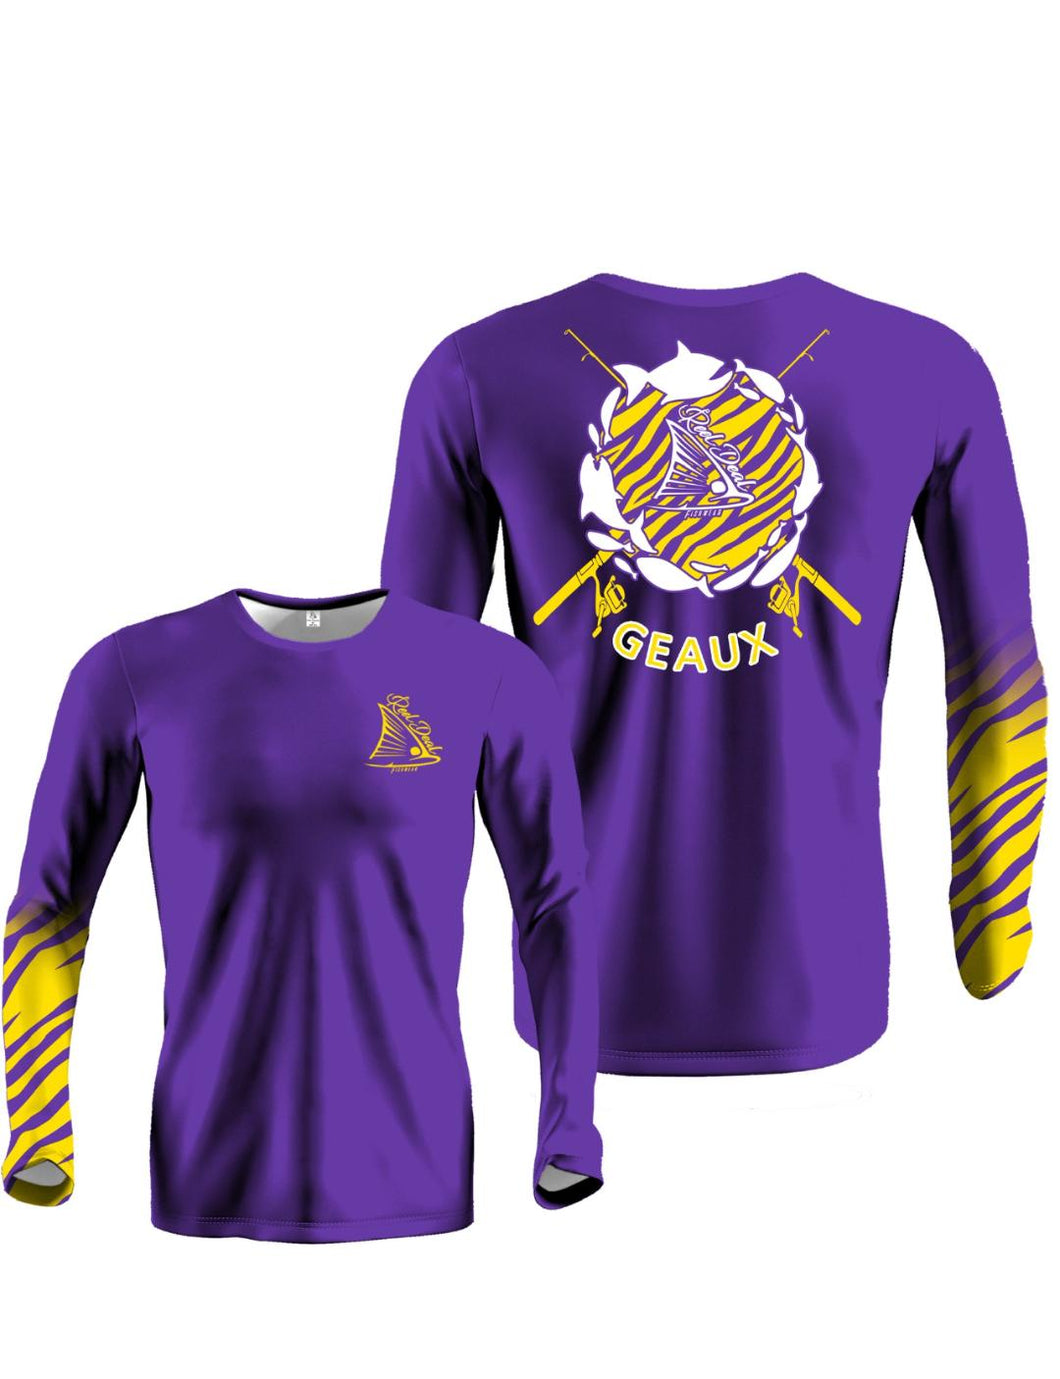 GEAUX Youth Purple Long Sleeve Performance Dri-fit (Y05)